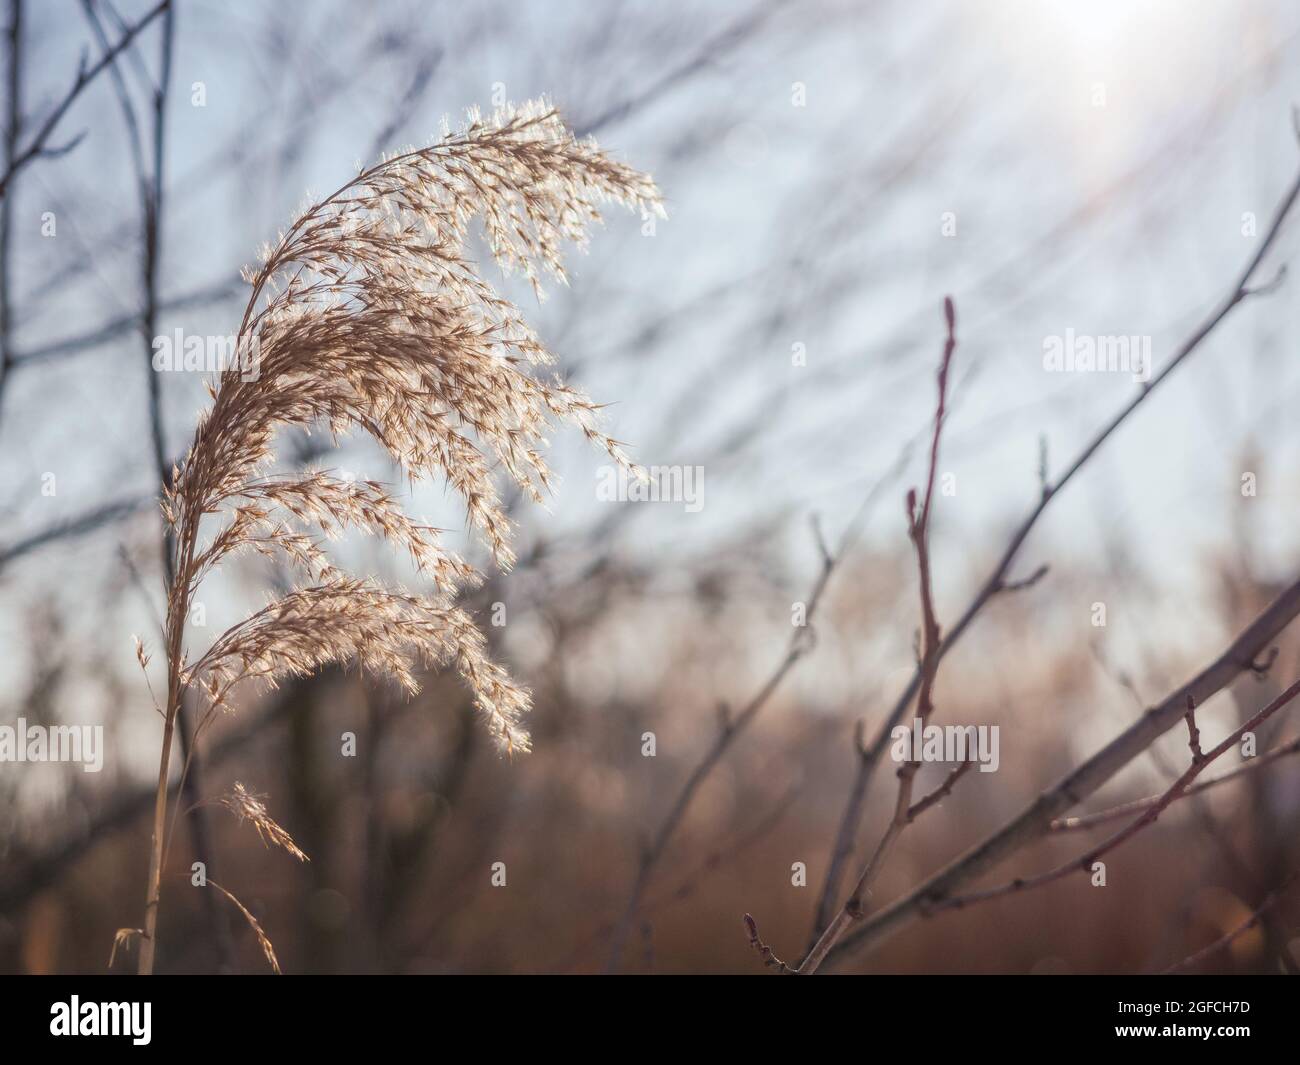 Reeds outside above sunny sky background nature, winter season Stock Photo